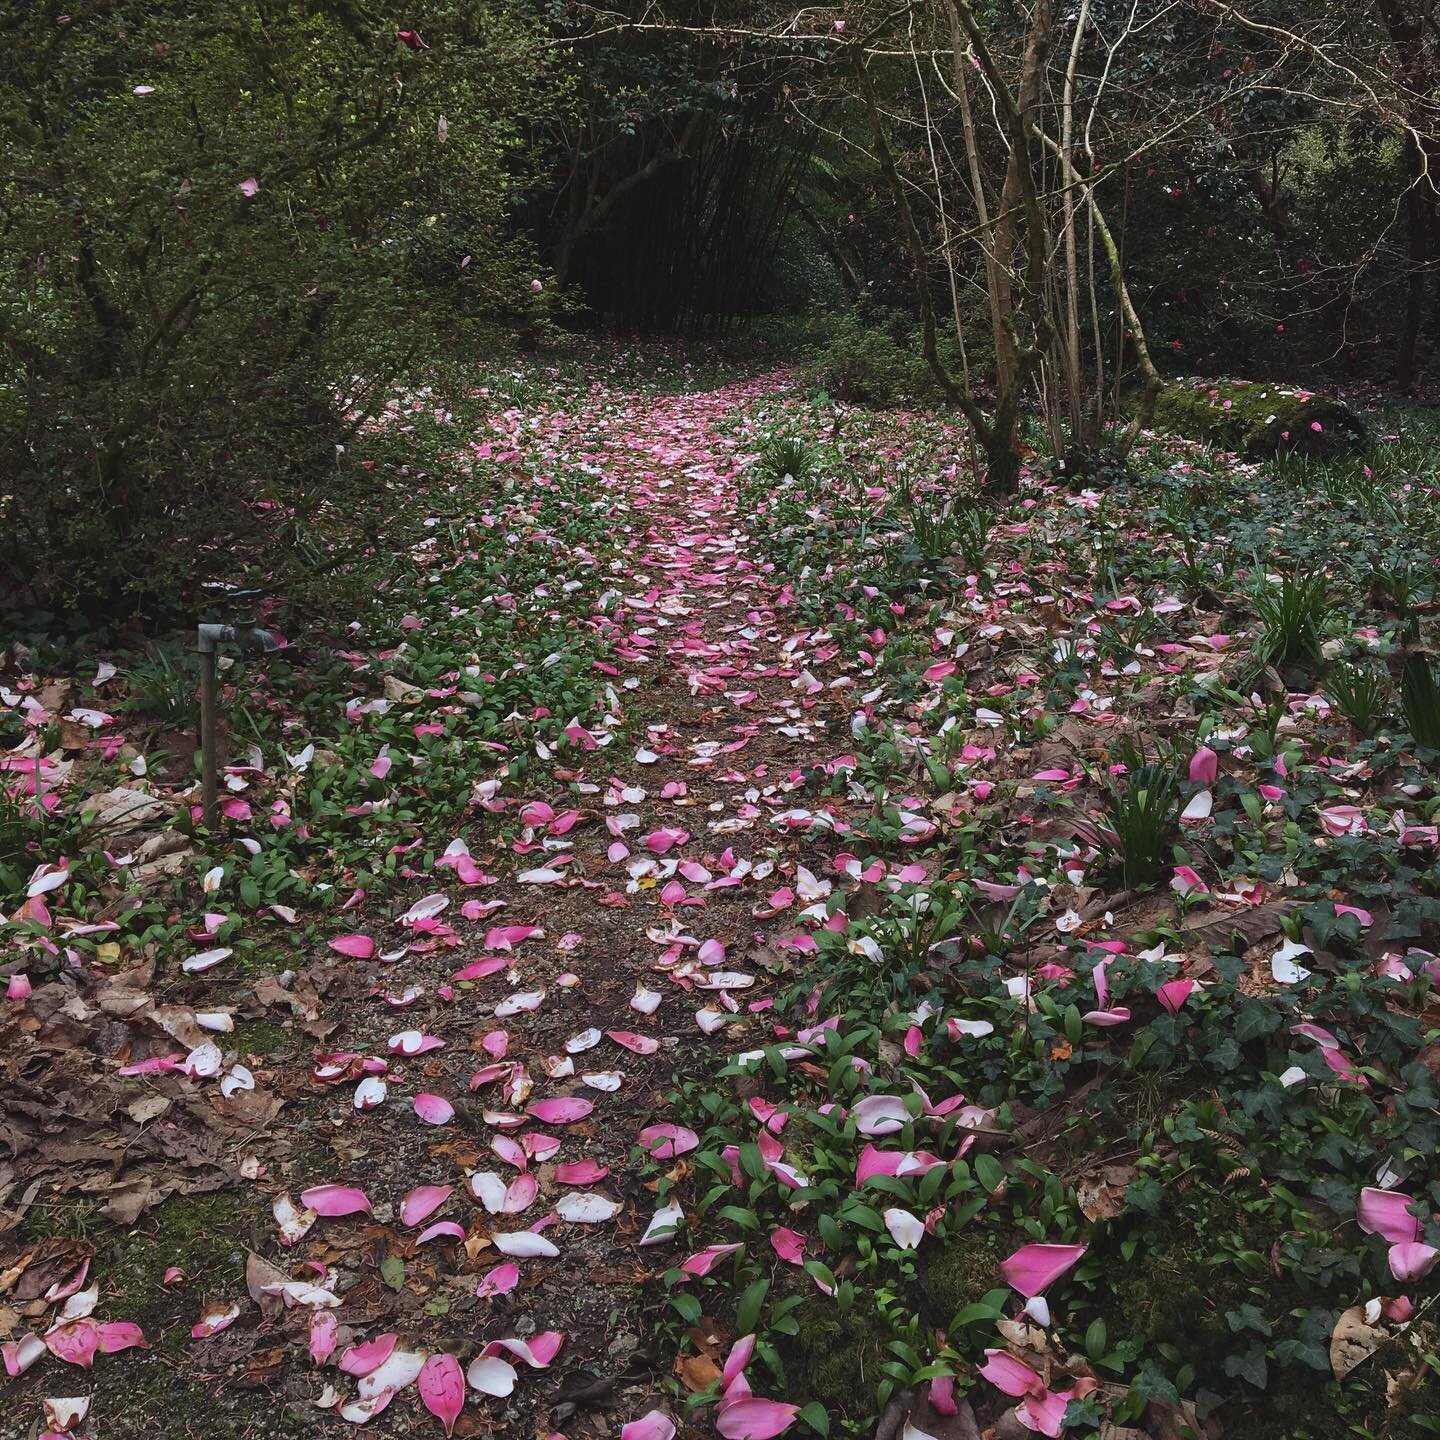 Magnolia petals leading the way